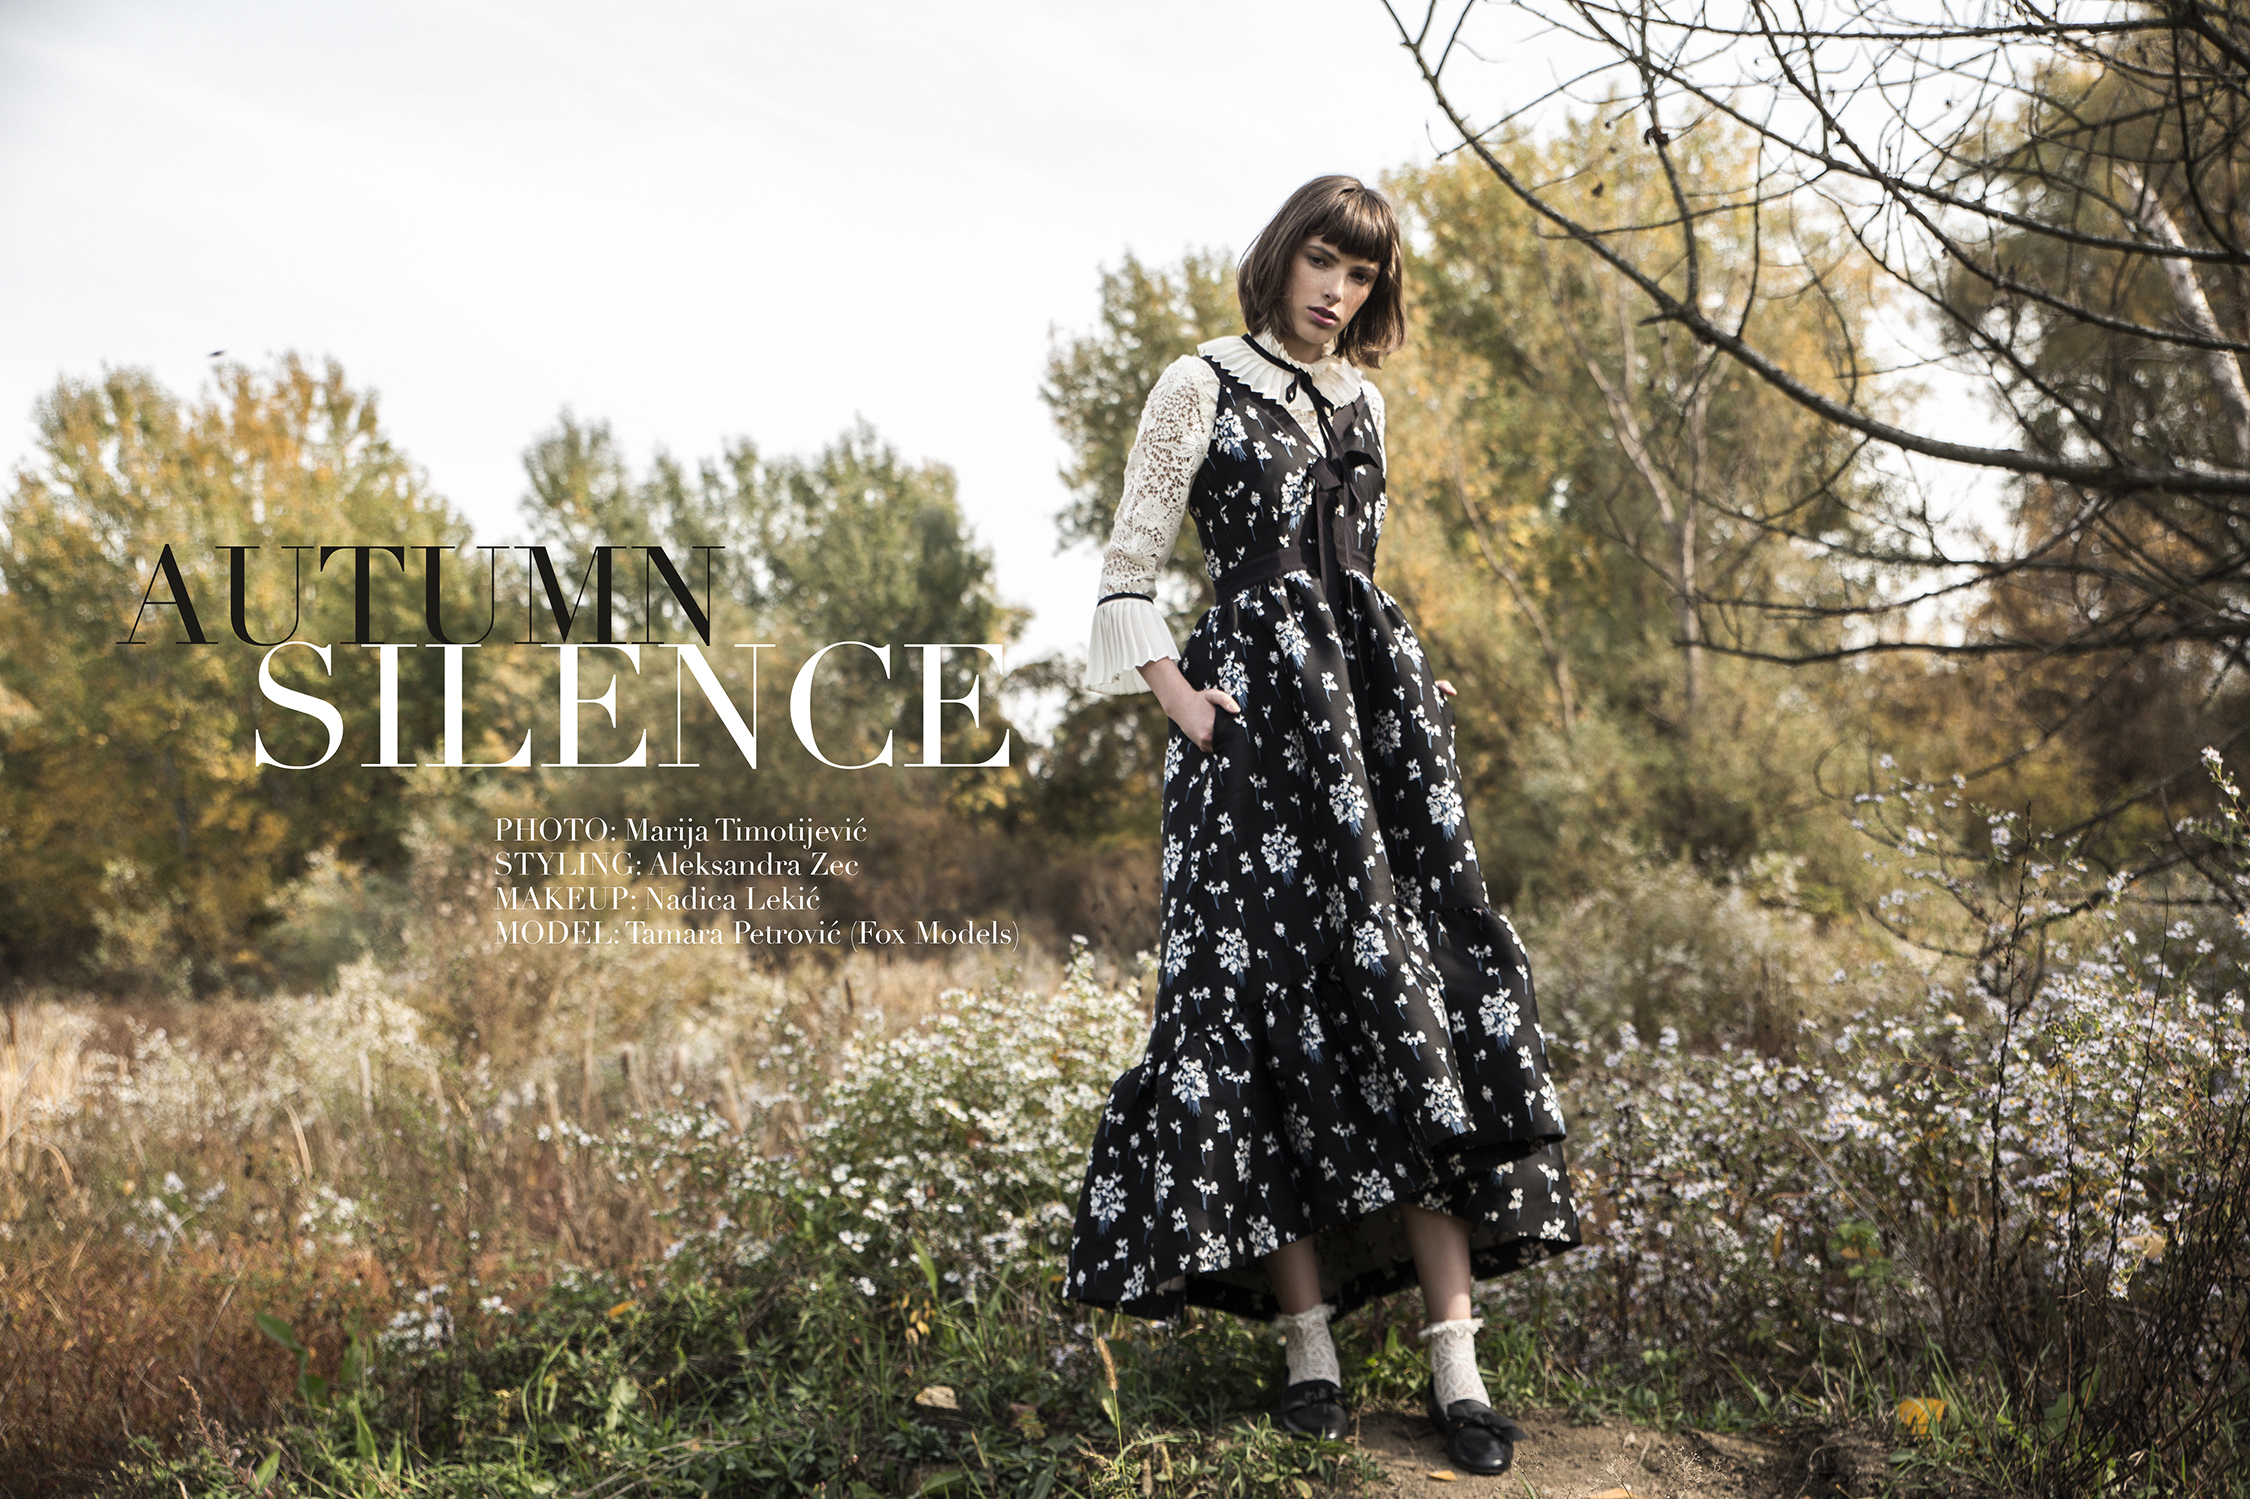 1 naslovna Wannabe editorijal: Autumn Silence